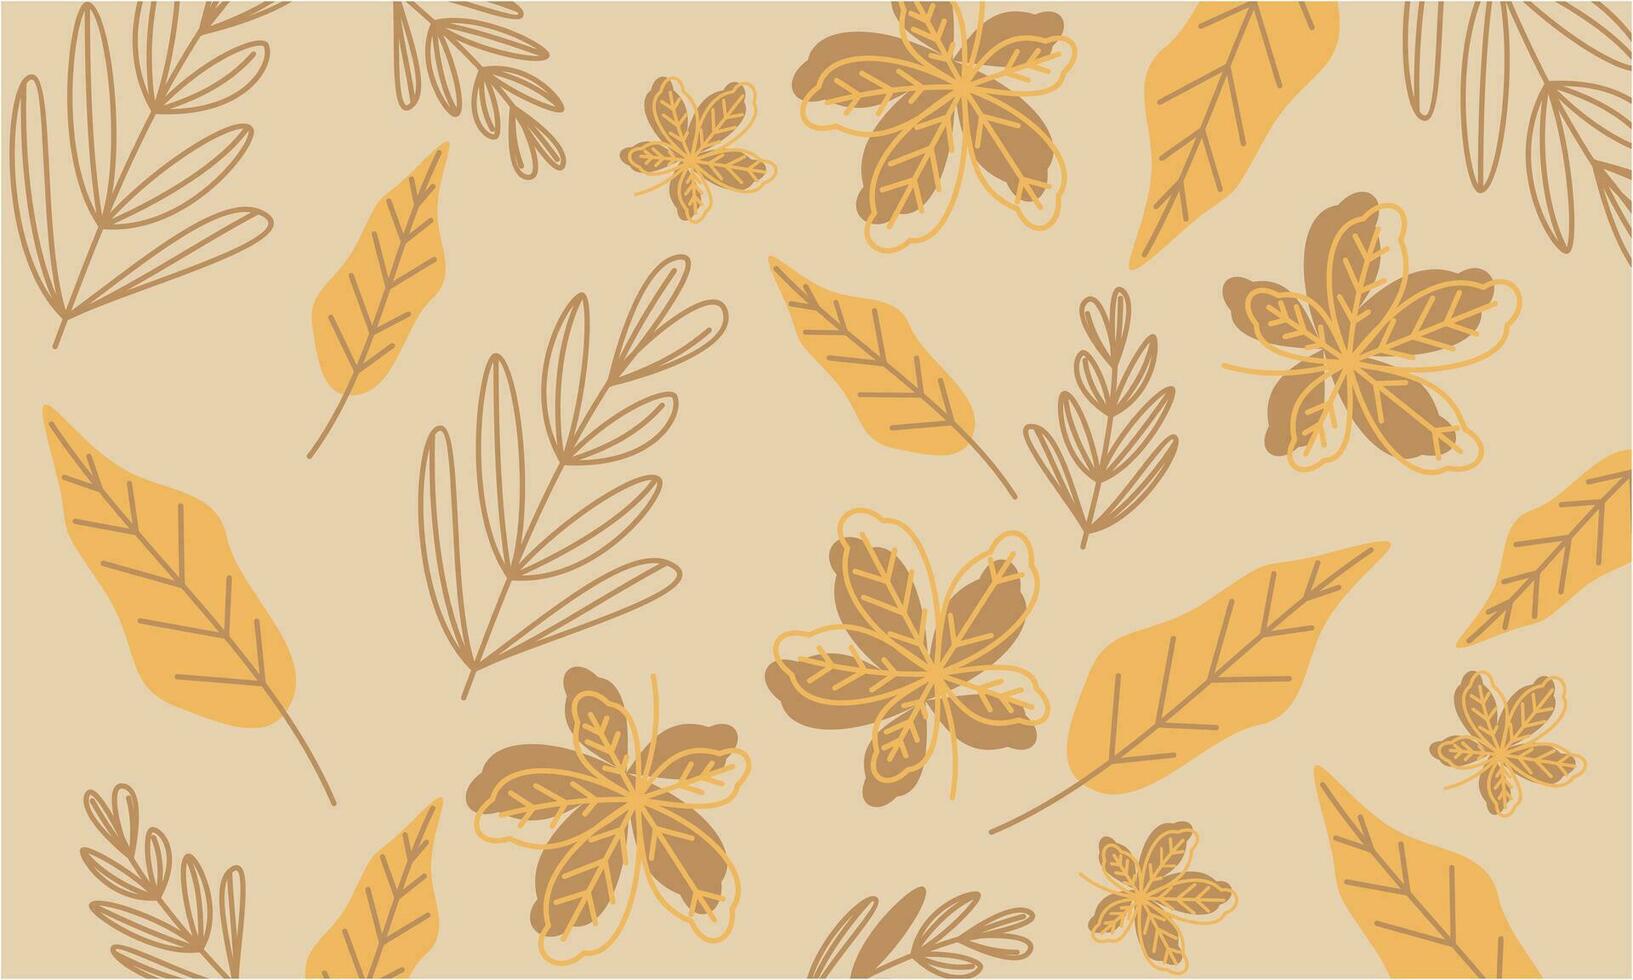 hand- getrokken herfst bladeren achtergrond logo vector